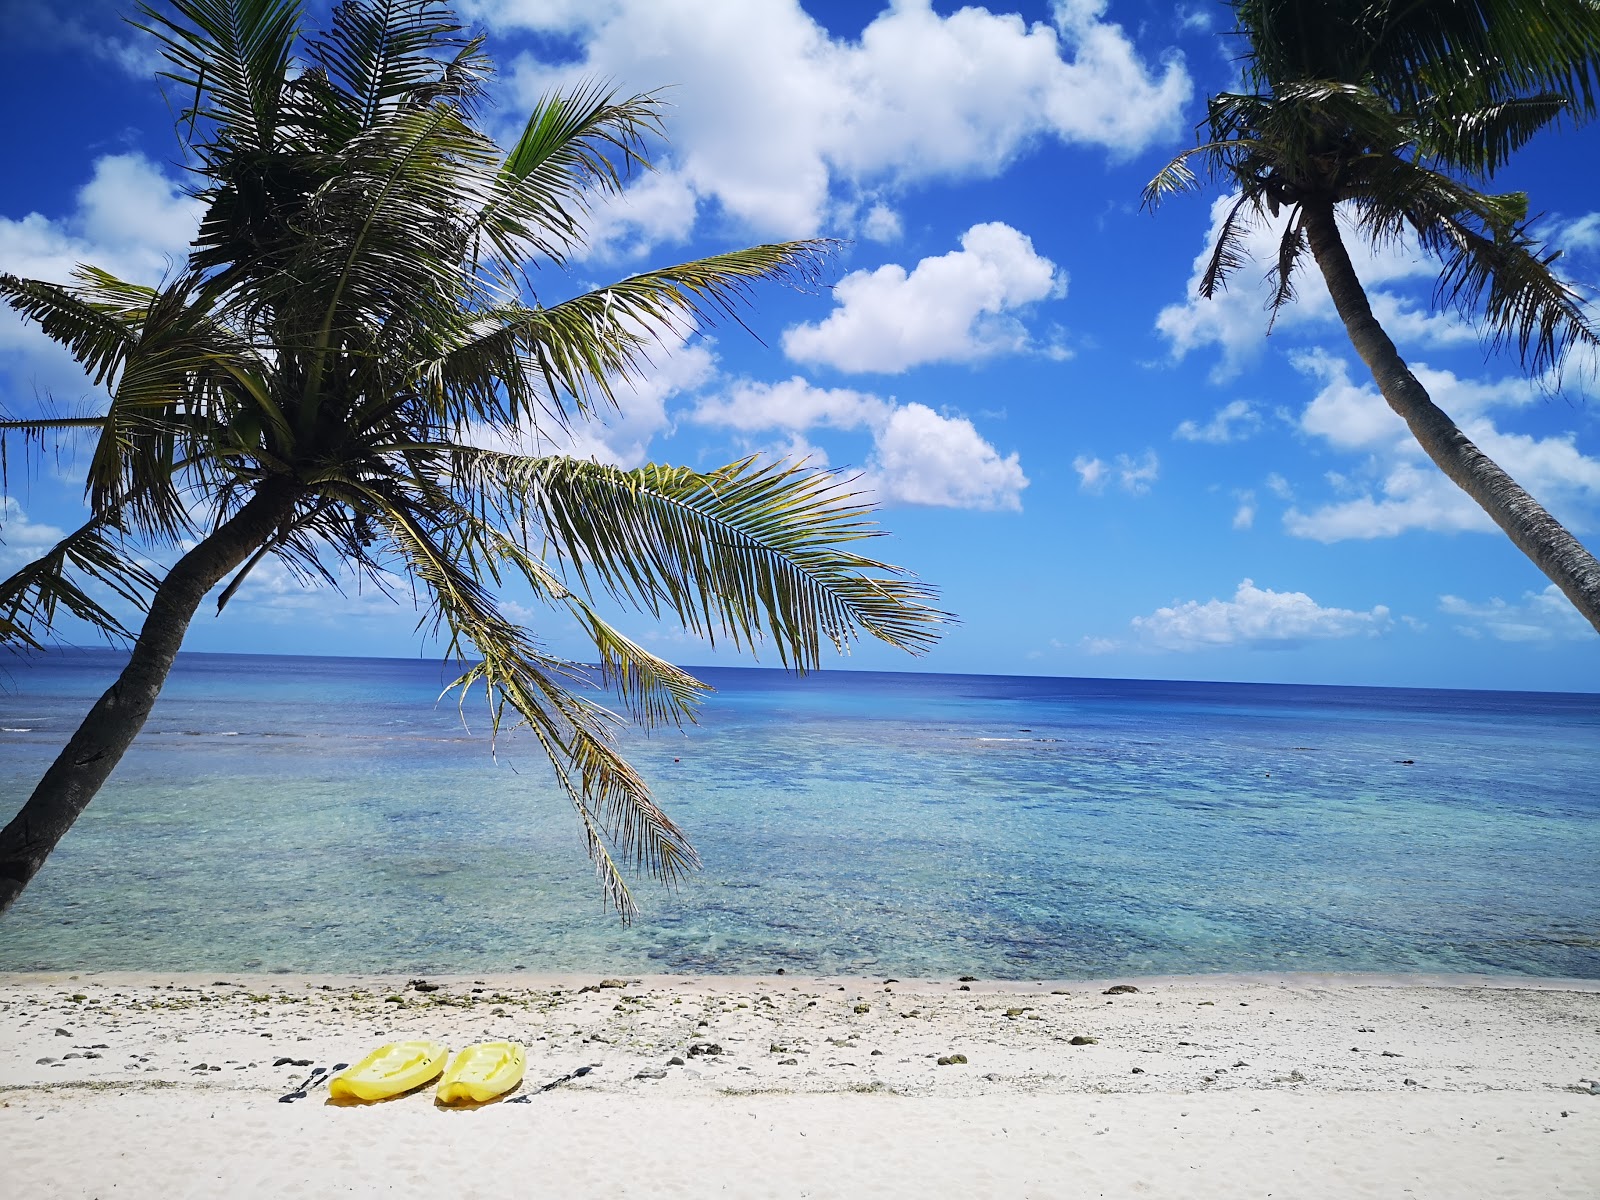 Photo of FaiFai Beach - popular place among relax connoisseurs